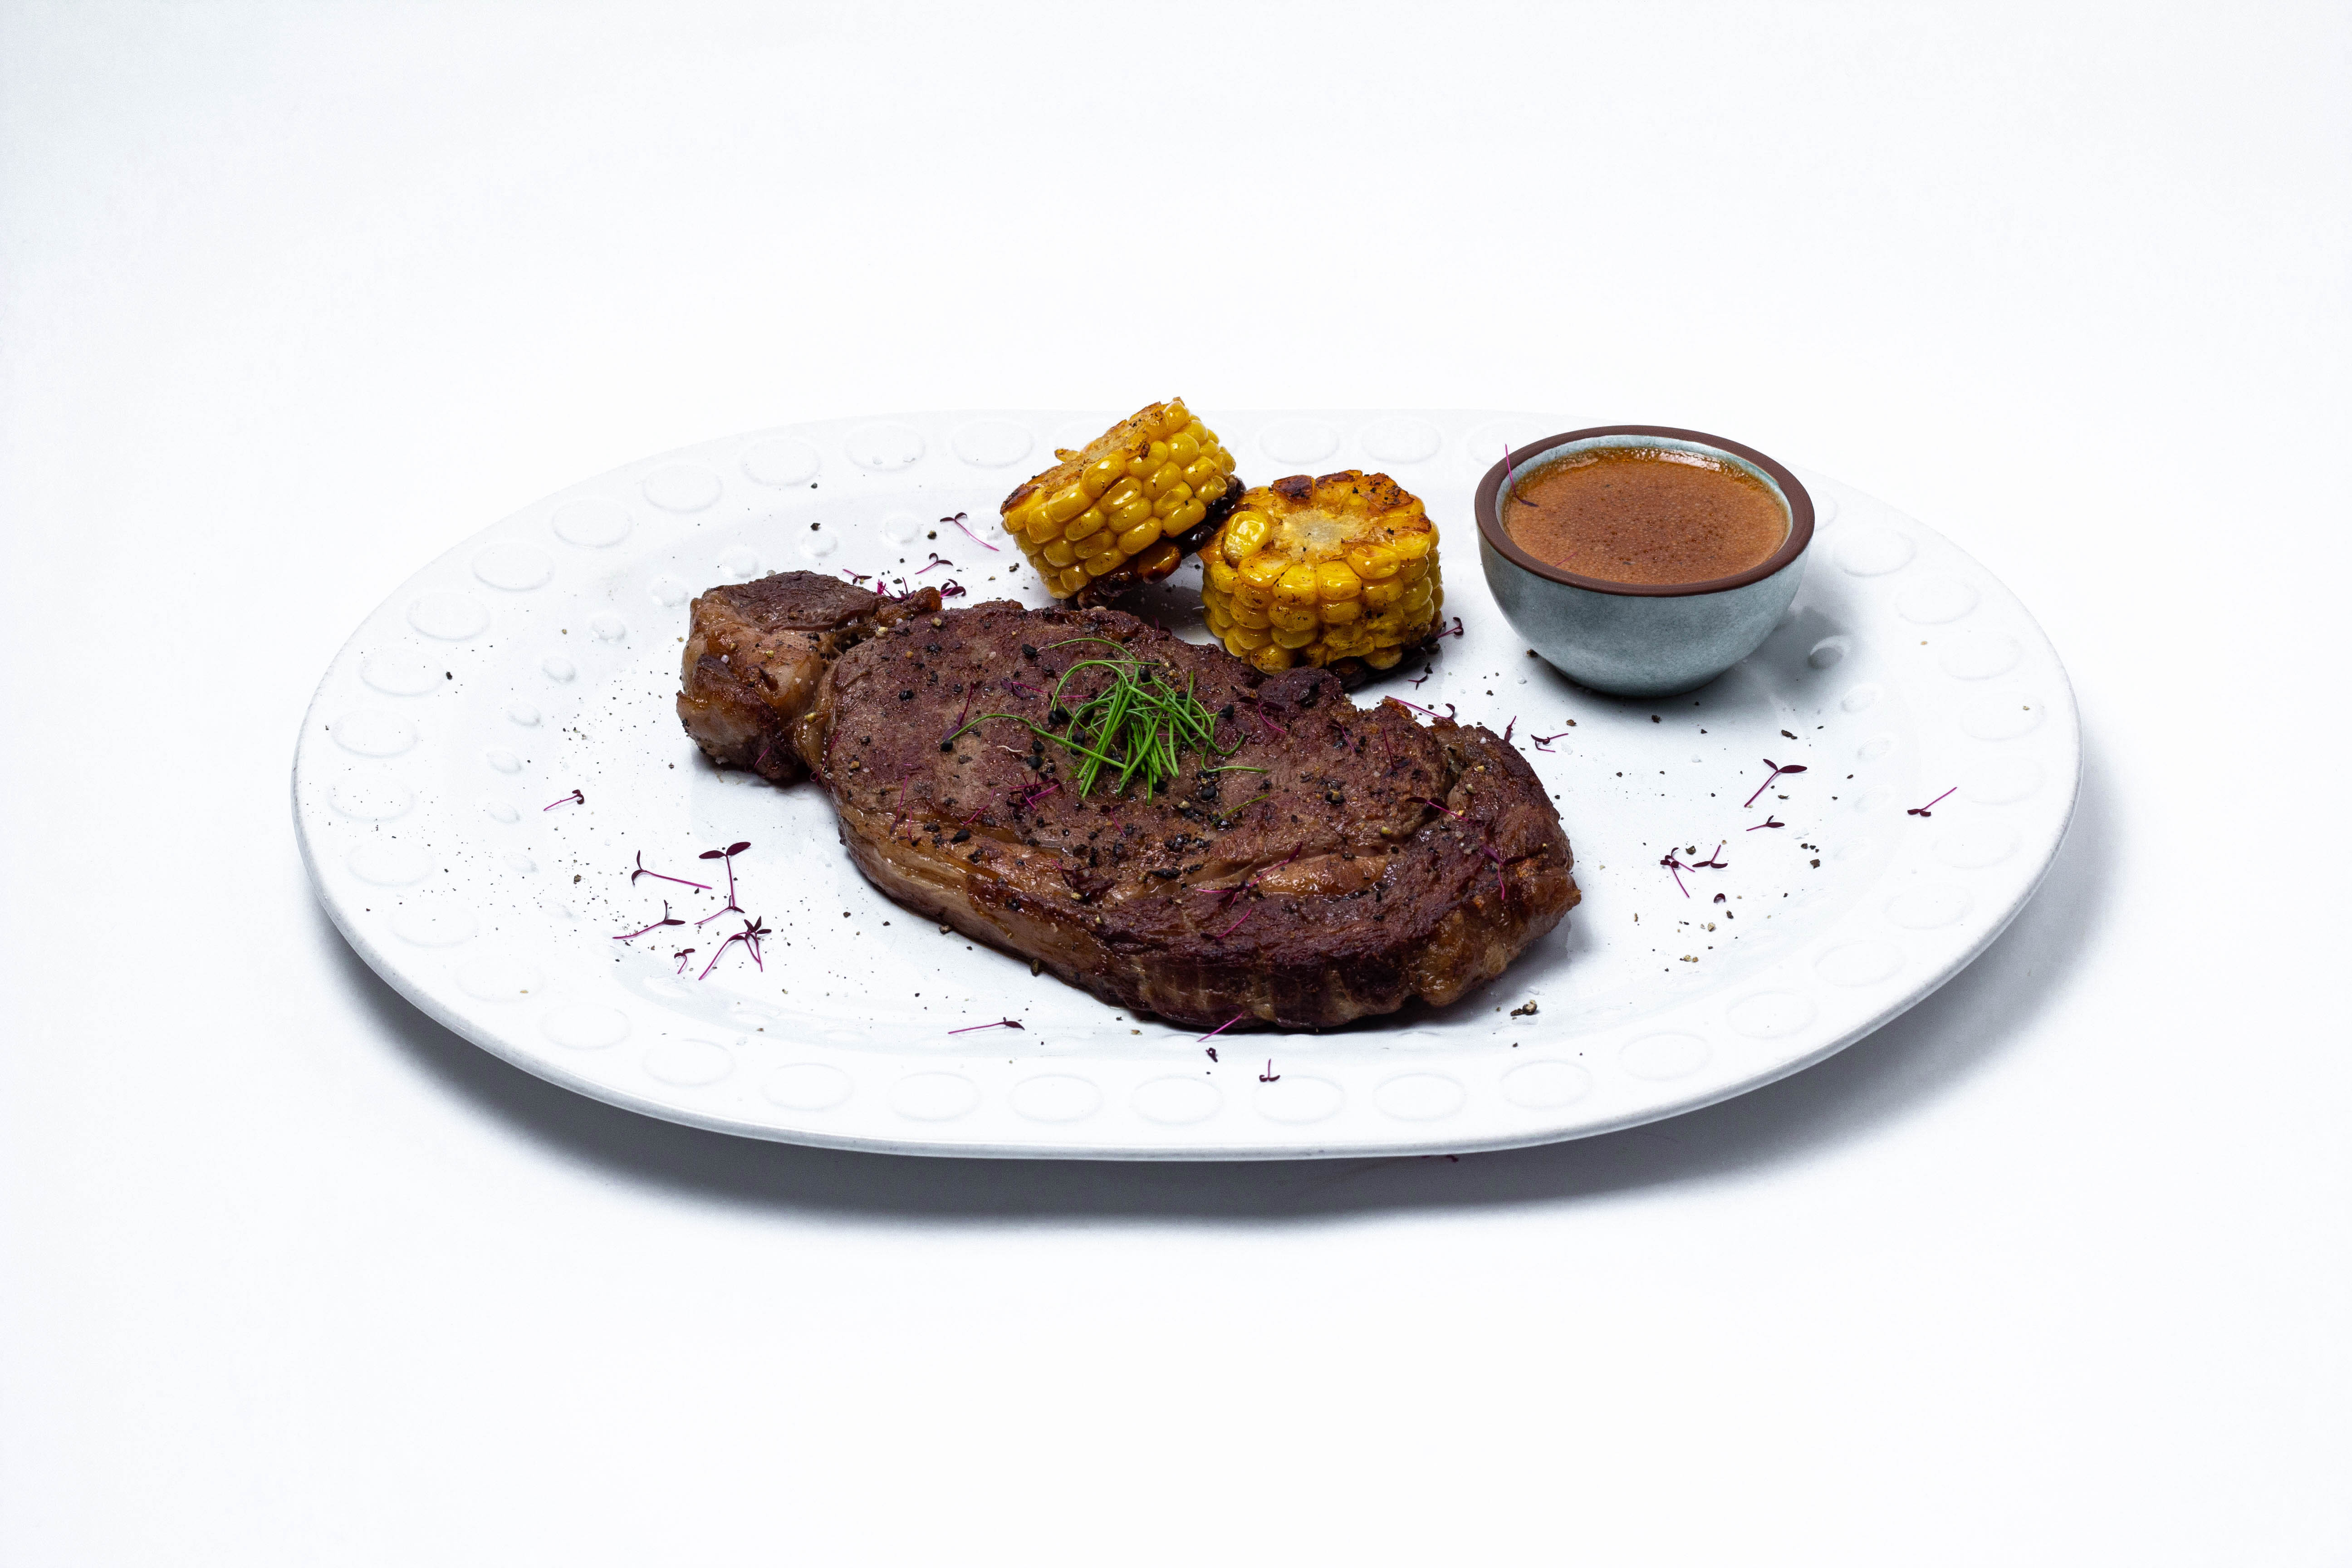 “Miratorg” Rib Eye marbled beef steak with corn and pepper sauce